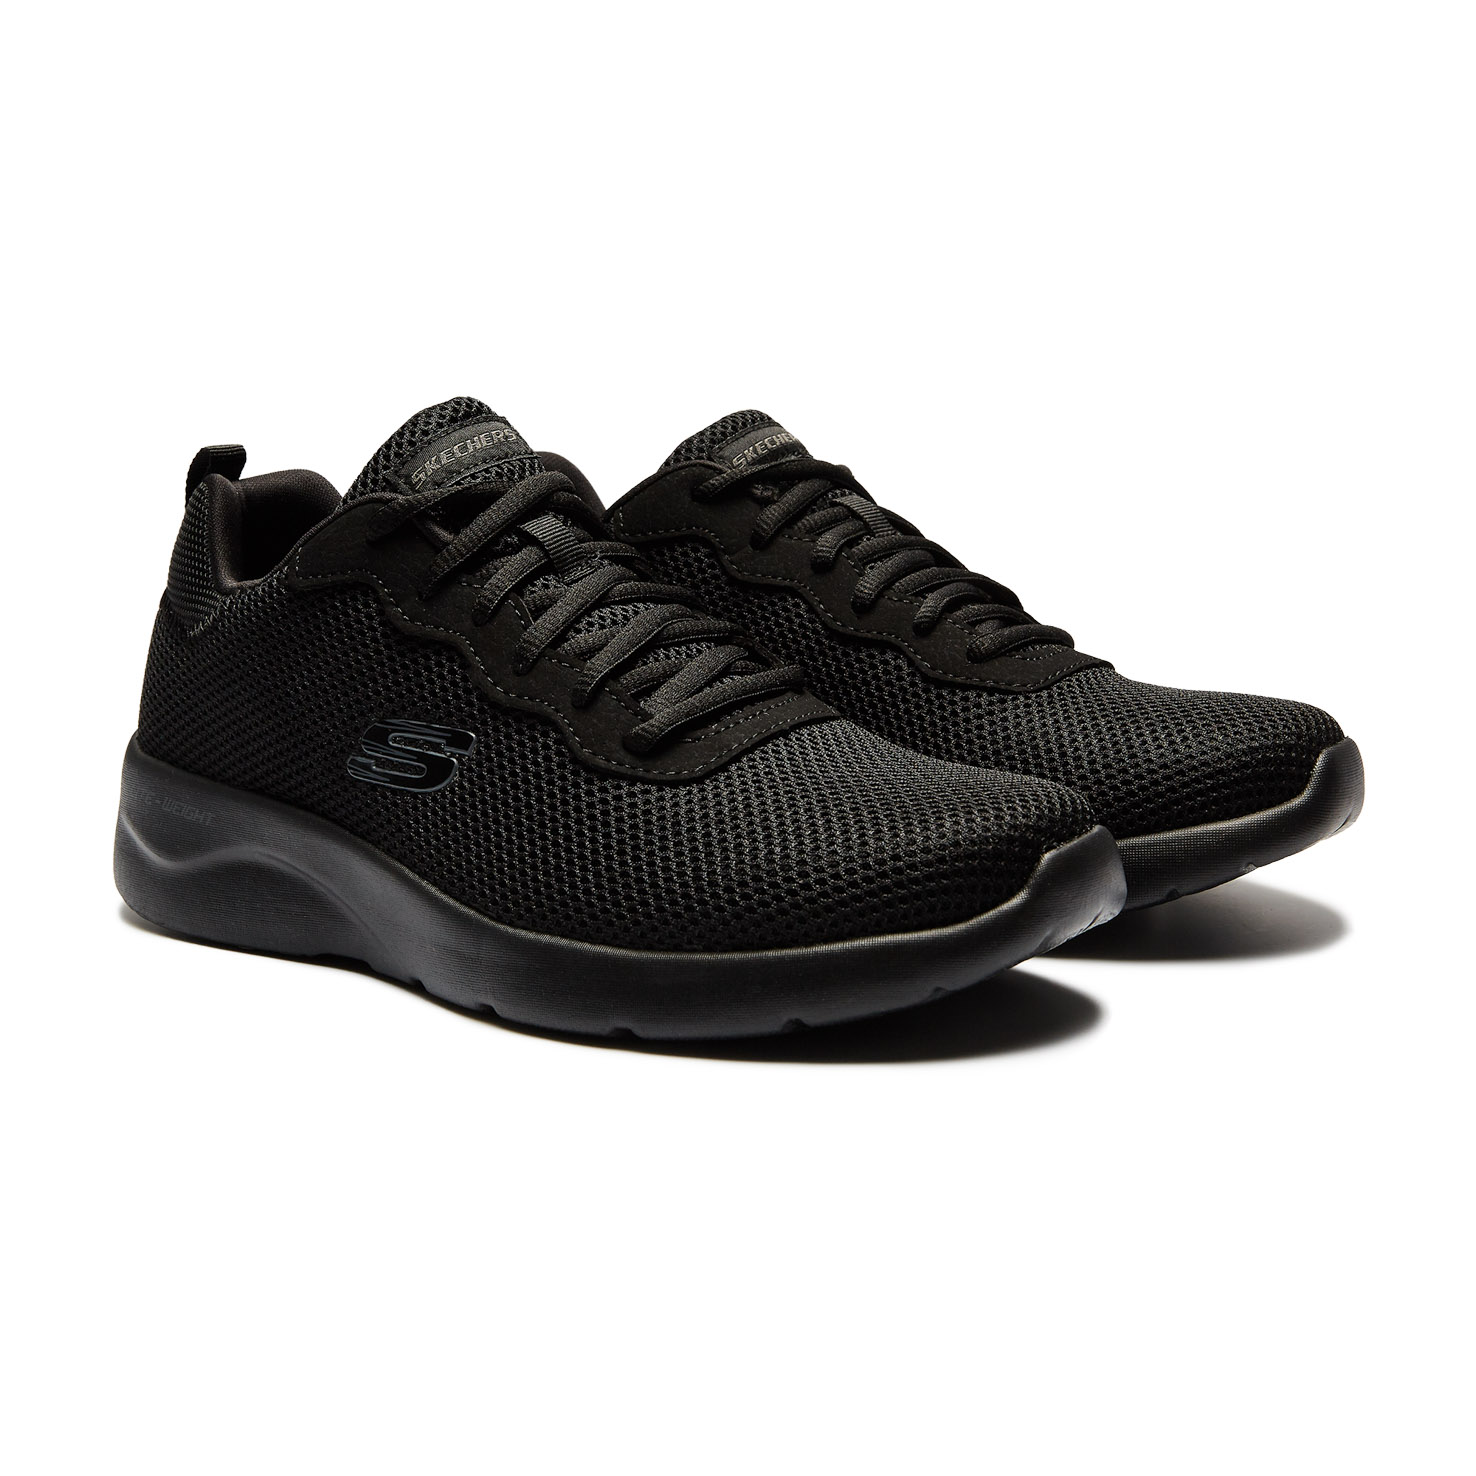 Men's low shoes SKECHERS, размер 41.5, цвет черный SK58362 - фото 2